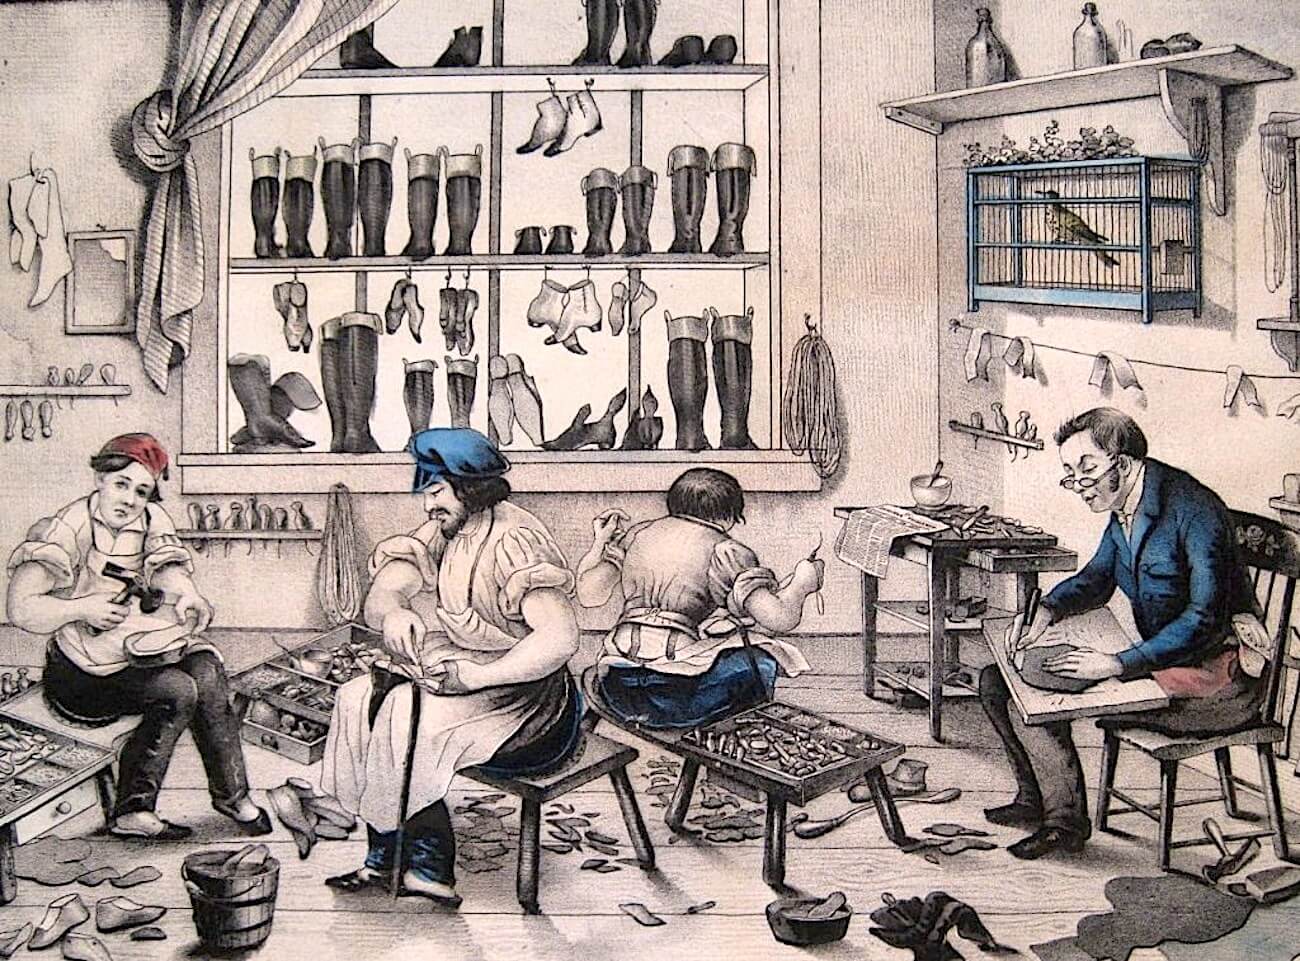 Cordwainer, shoe maker